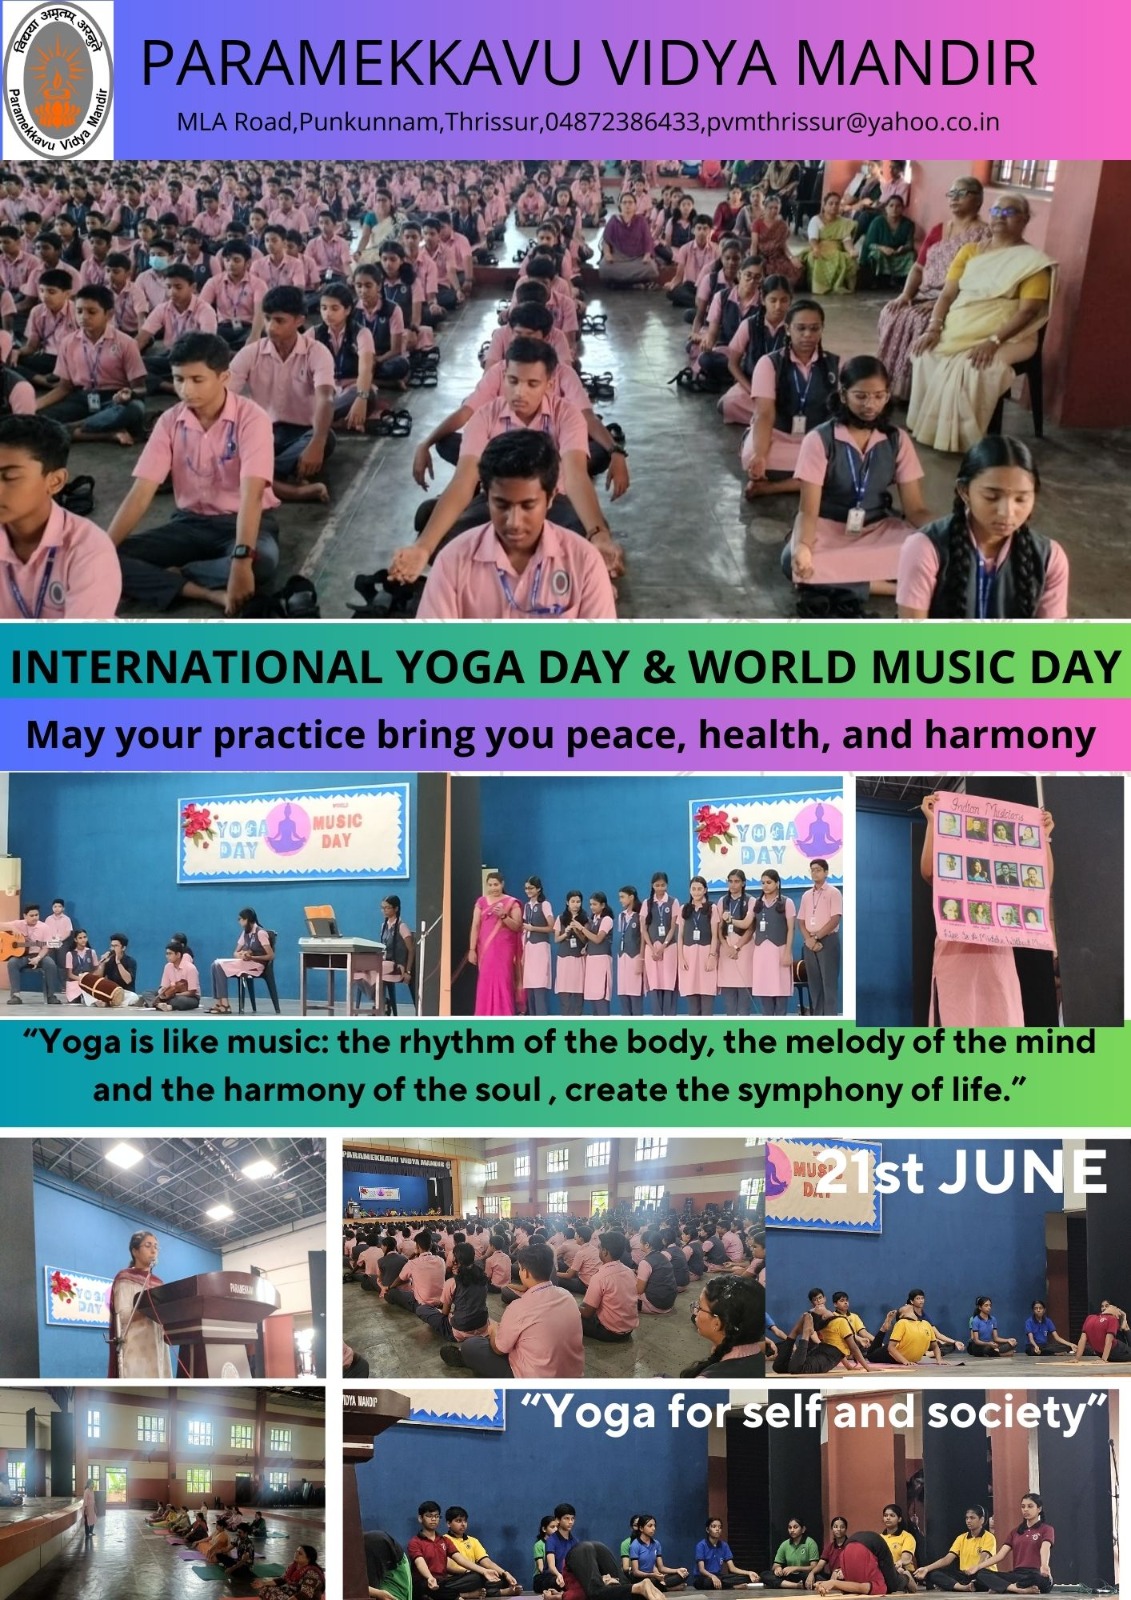 International Yoga Day & World Music Day